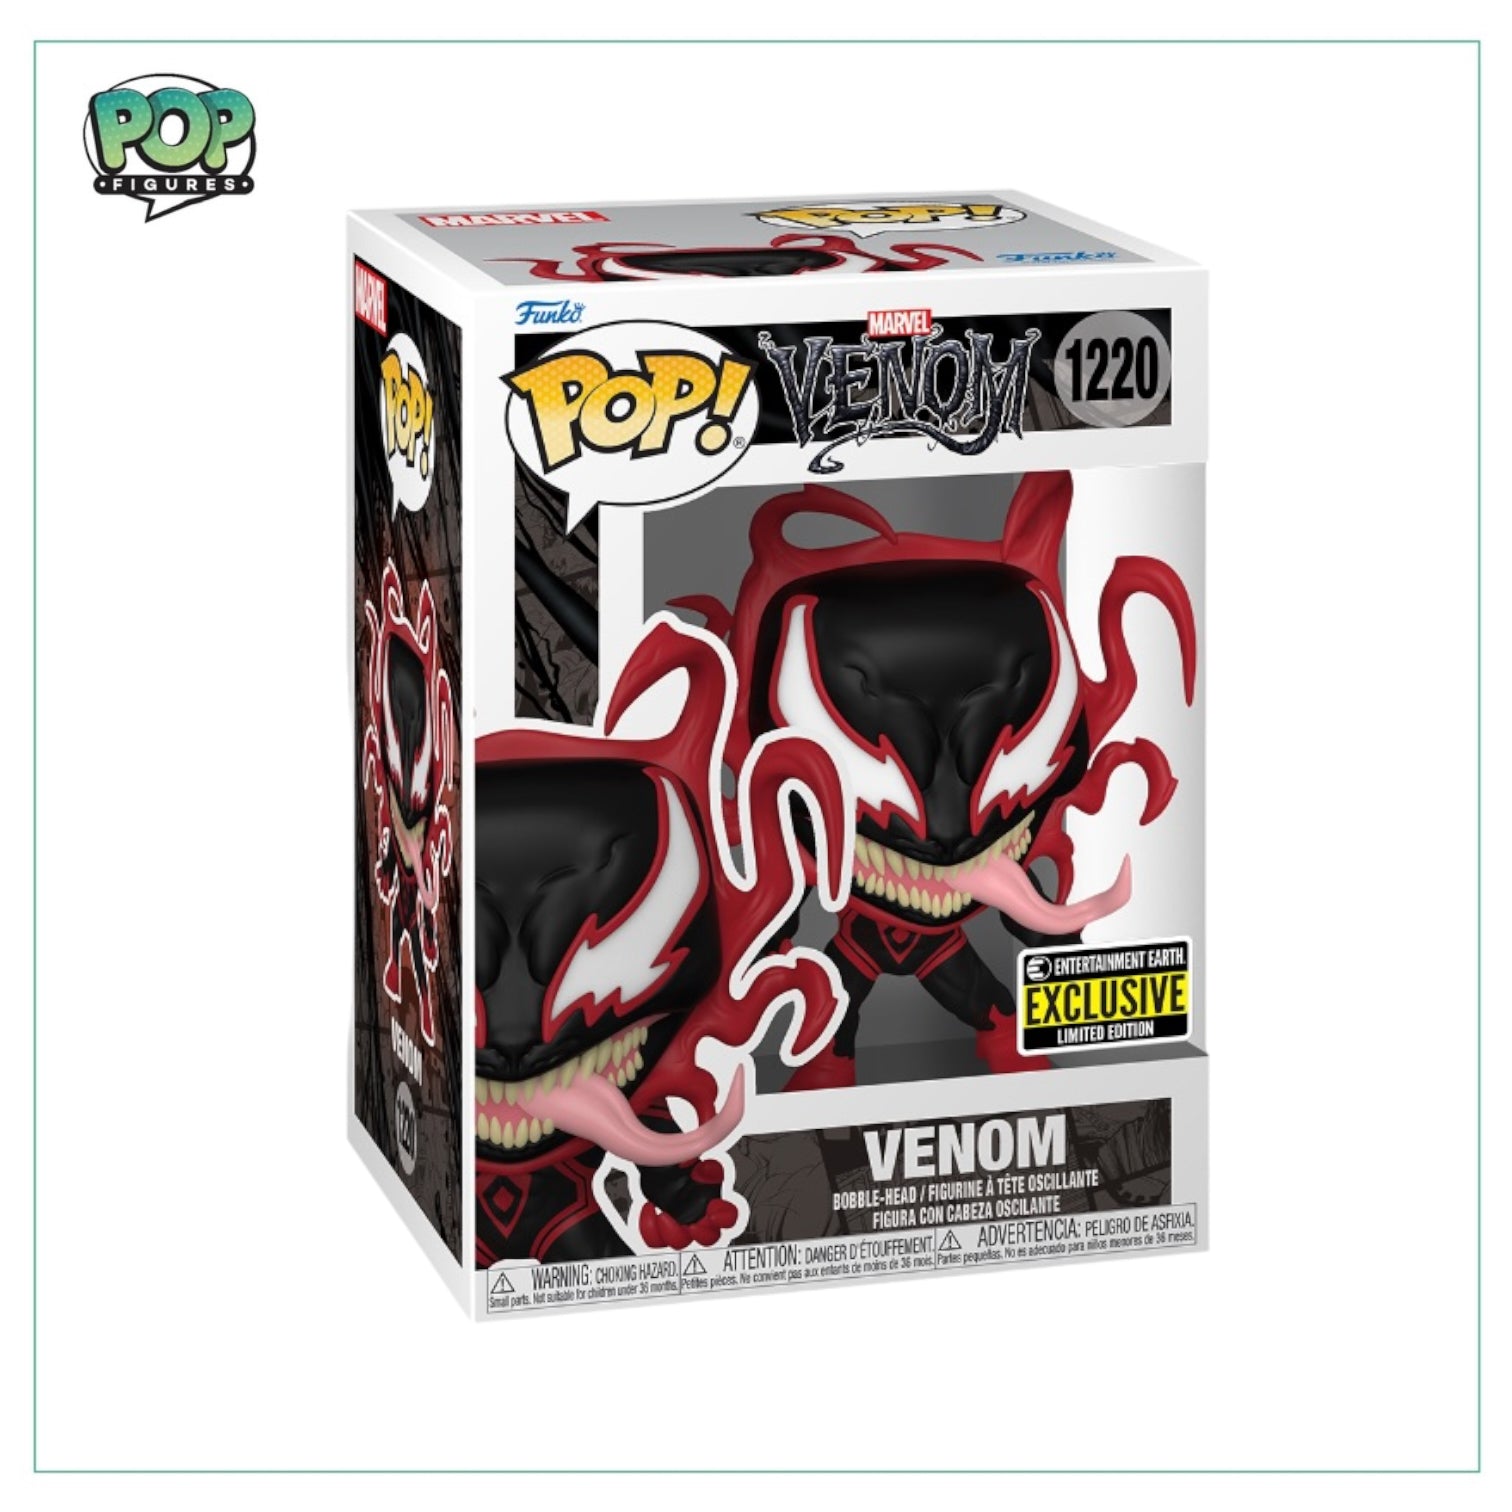 Venom #1220 Funko Pop! - Venom - Entertainment Earth Exclusive